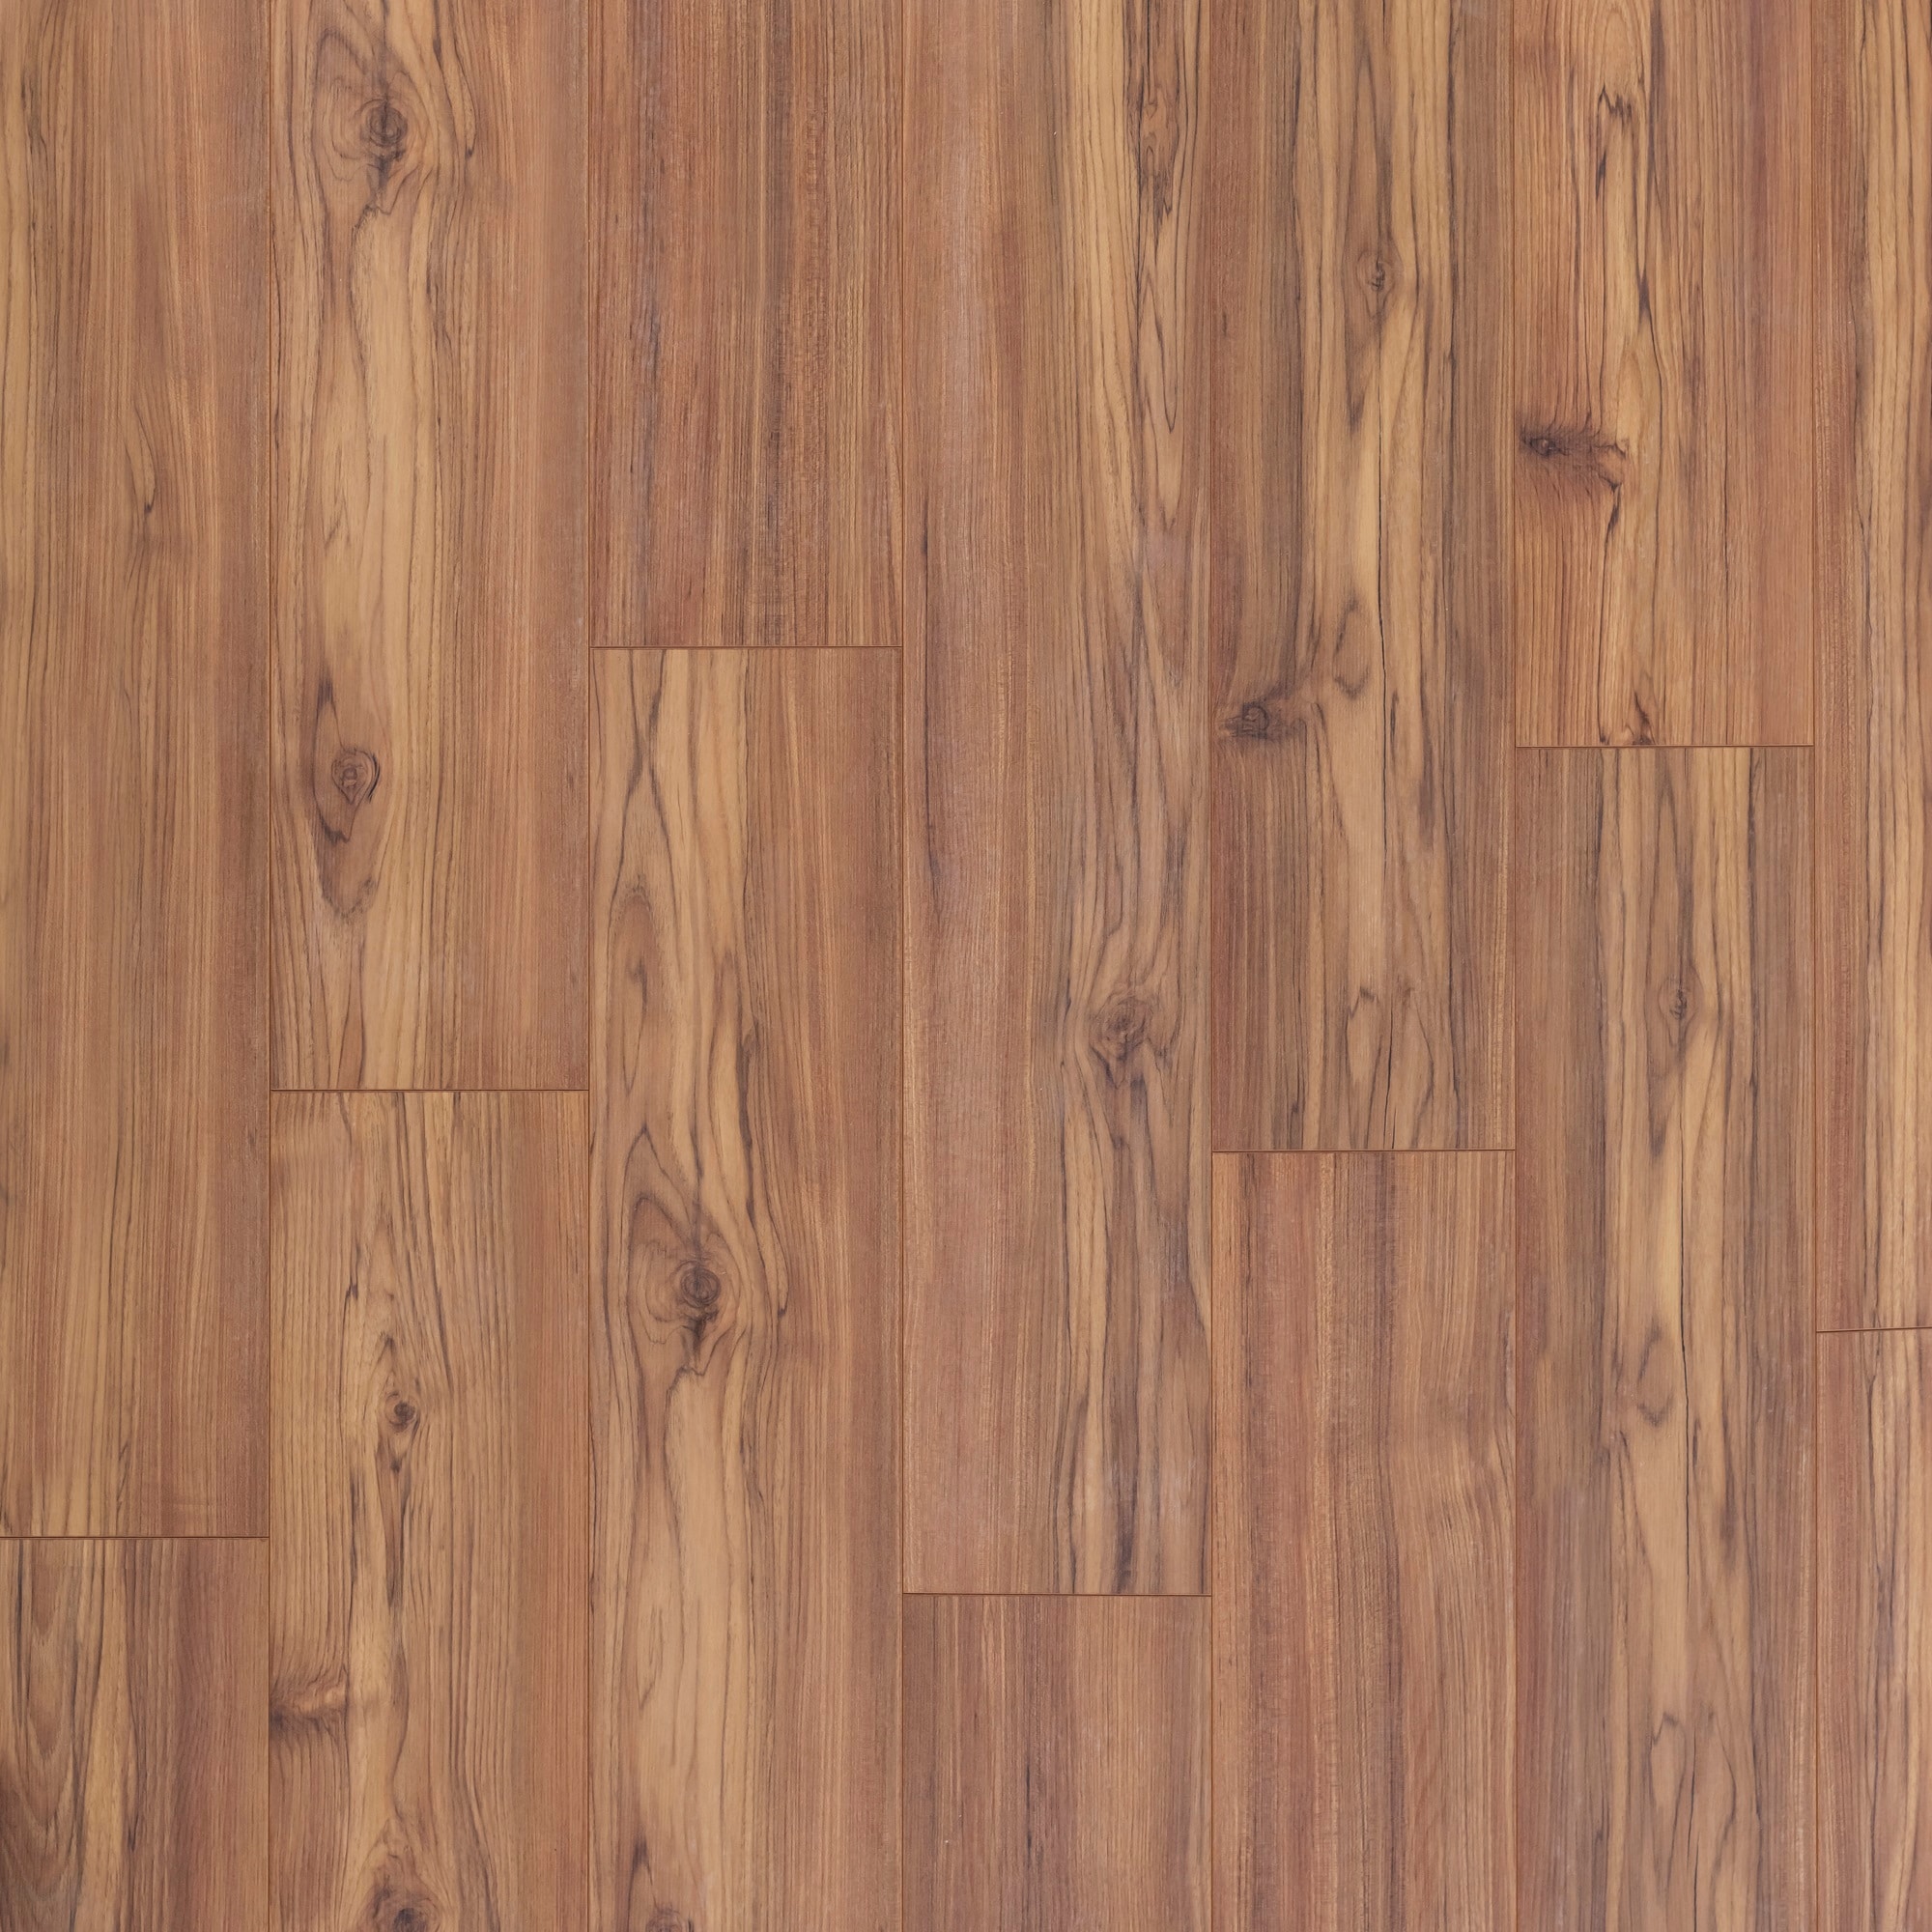 9 Inch Laminate Flooring Cutter Engineered Wood Pvc Vinyl Tile Floor Tool